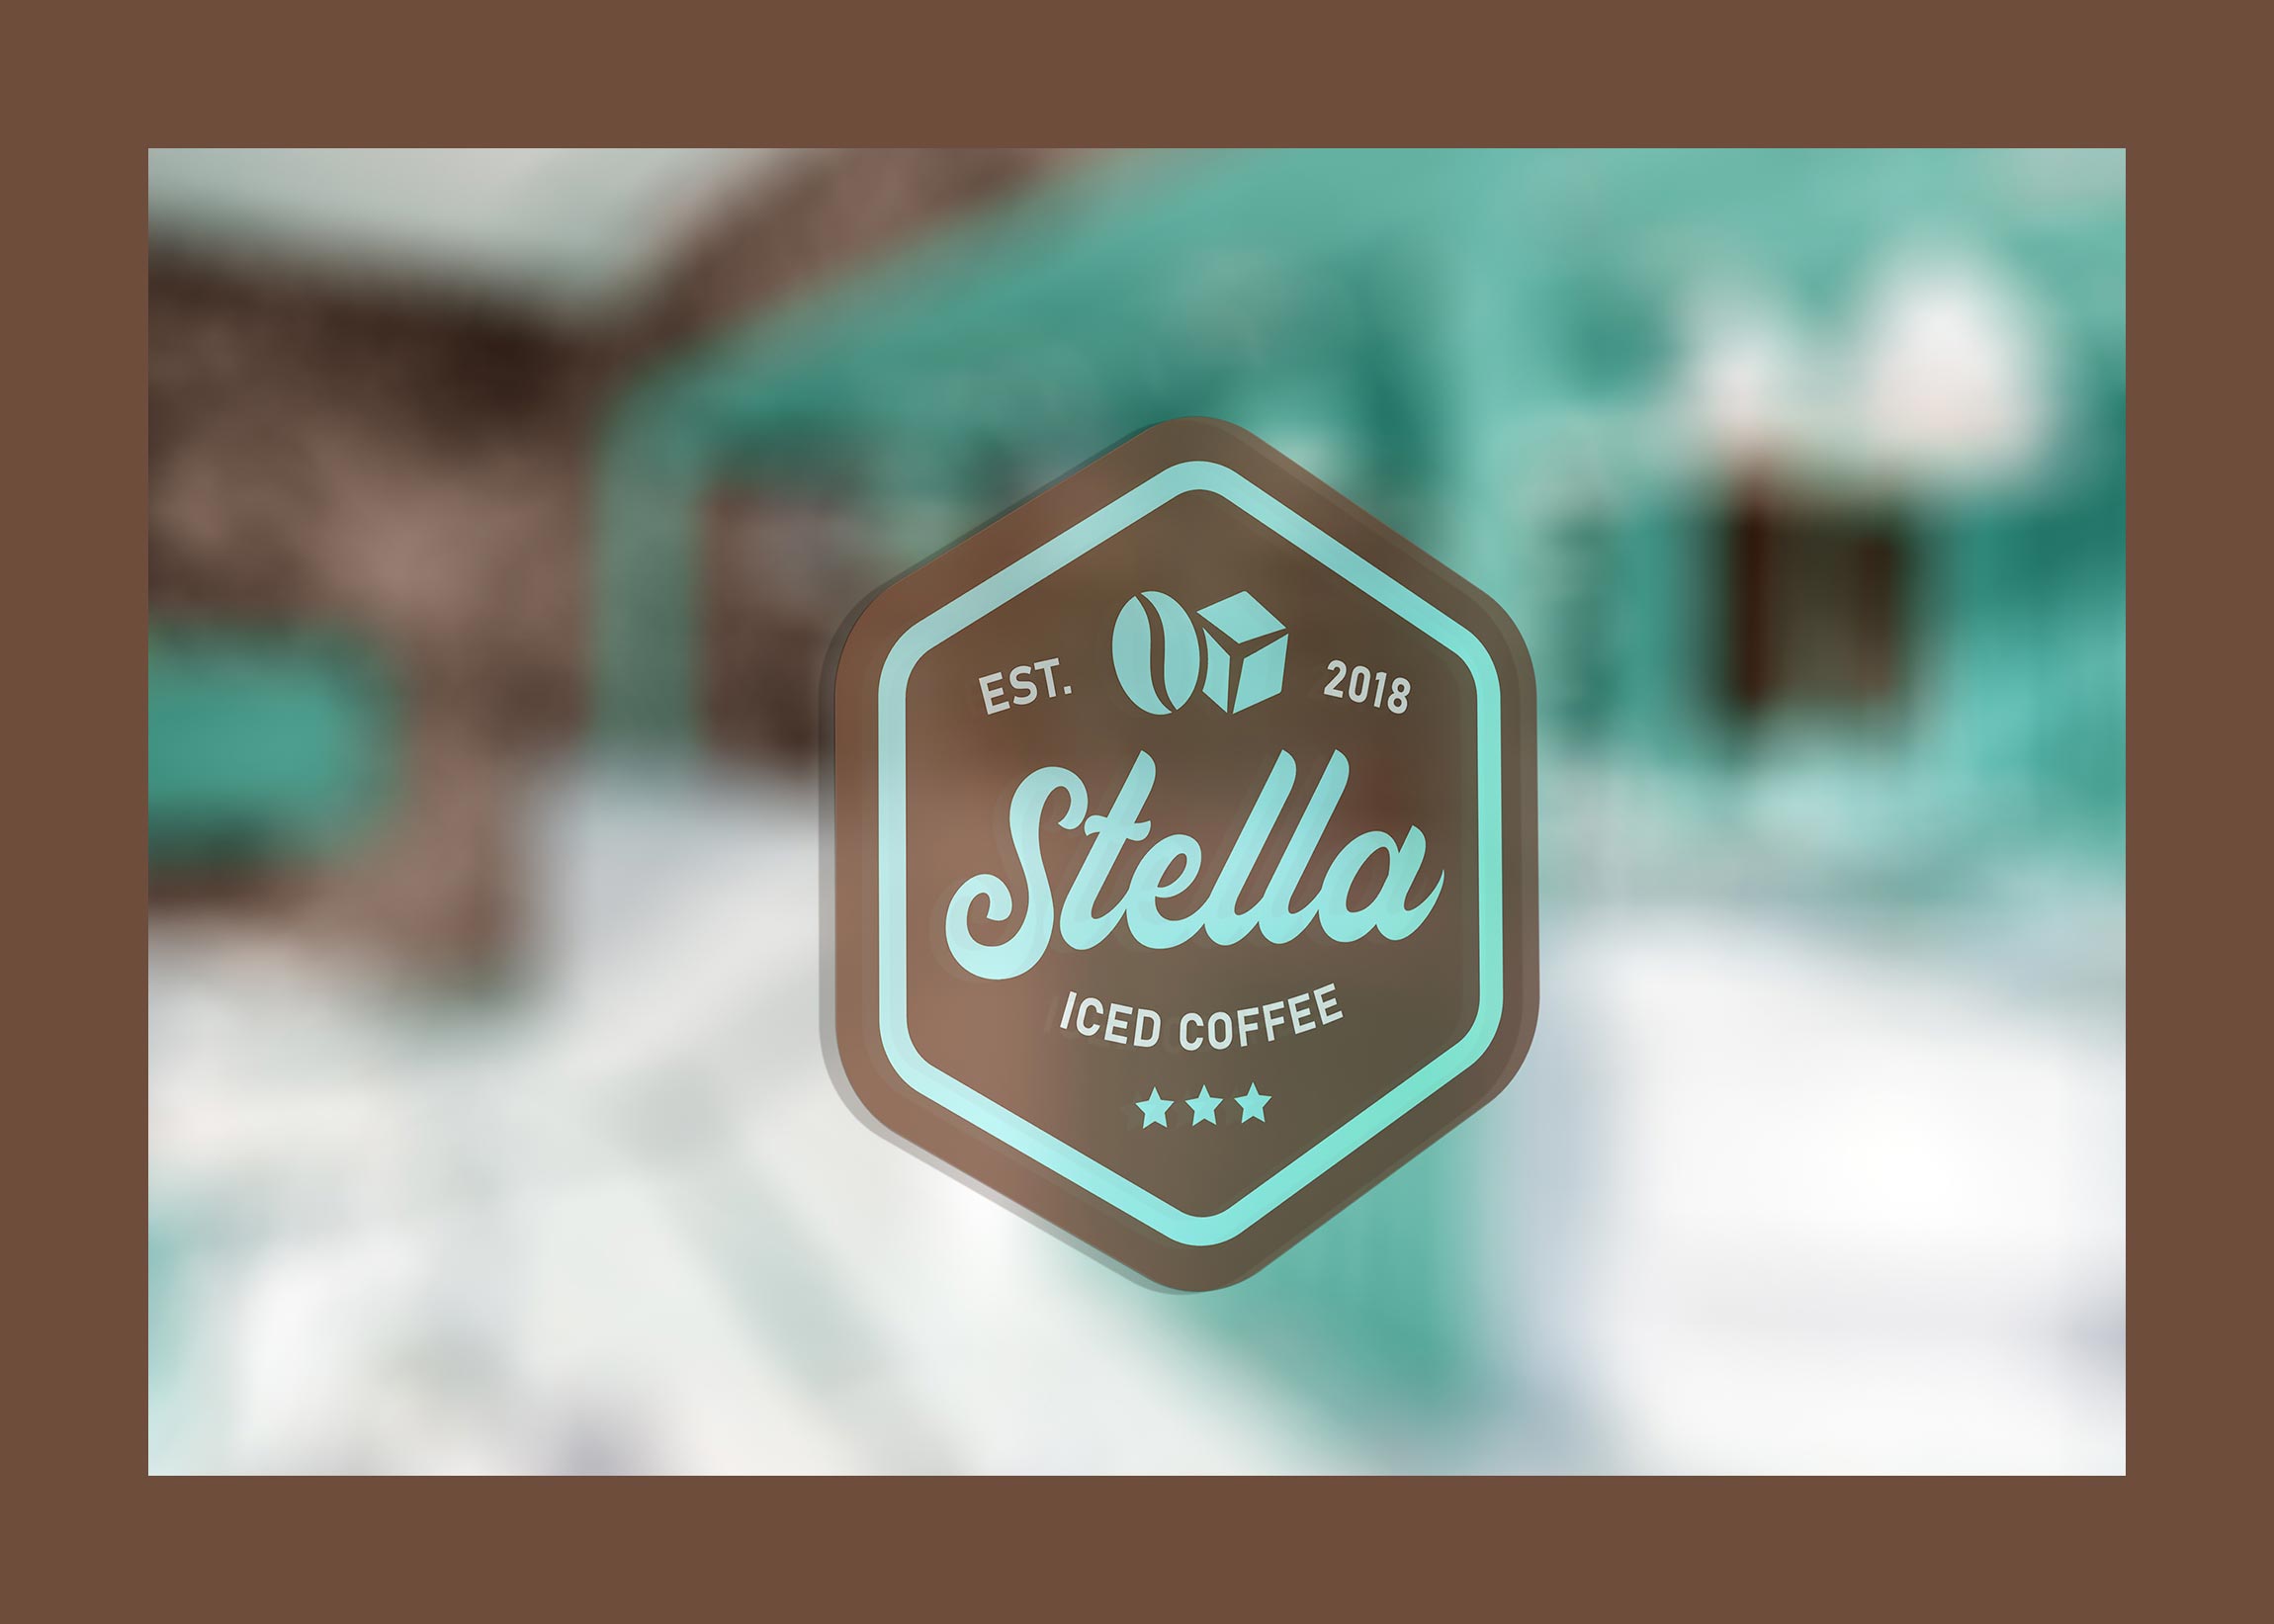 Stella Iced Coffee